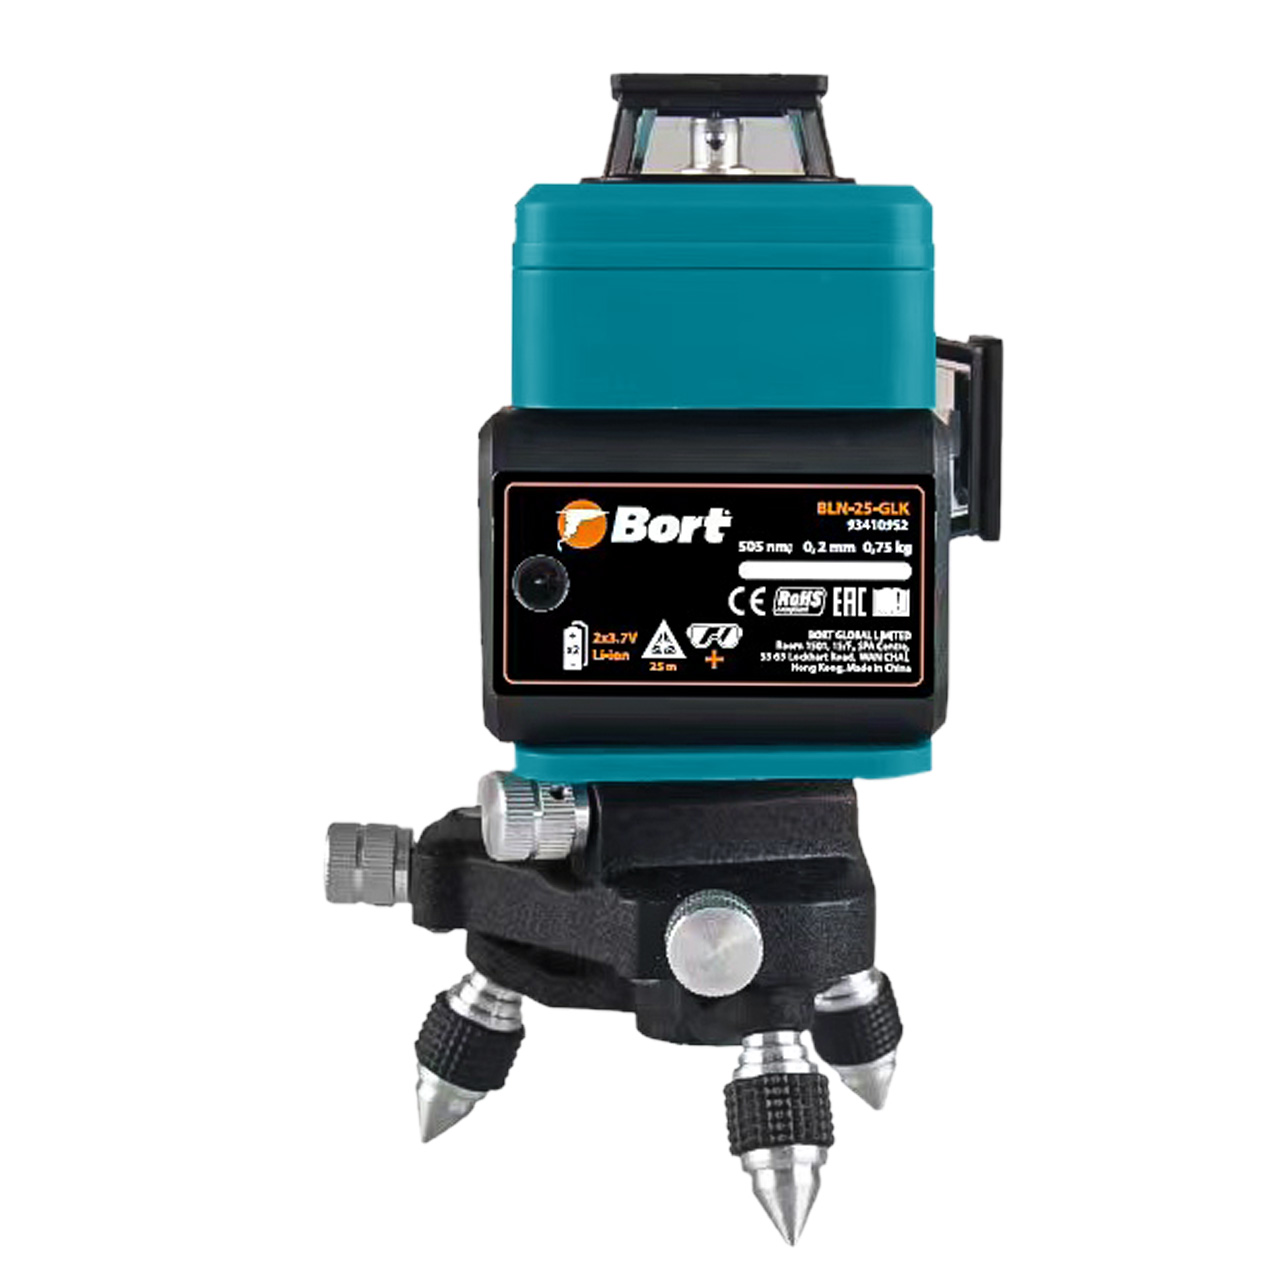 Level laser automatic BORT BLN-25-GLK